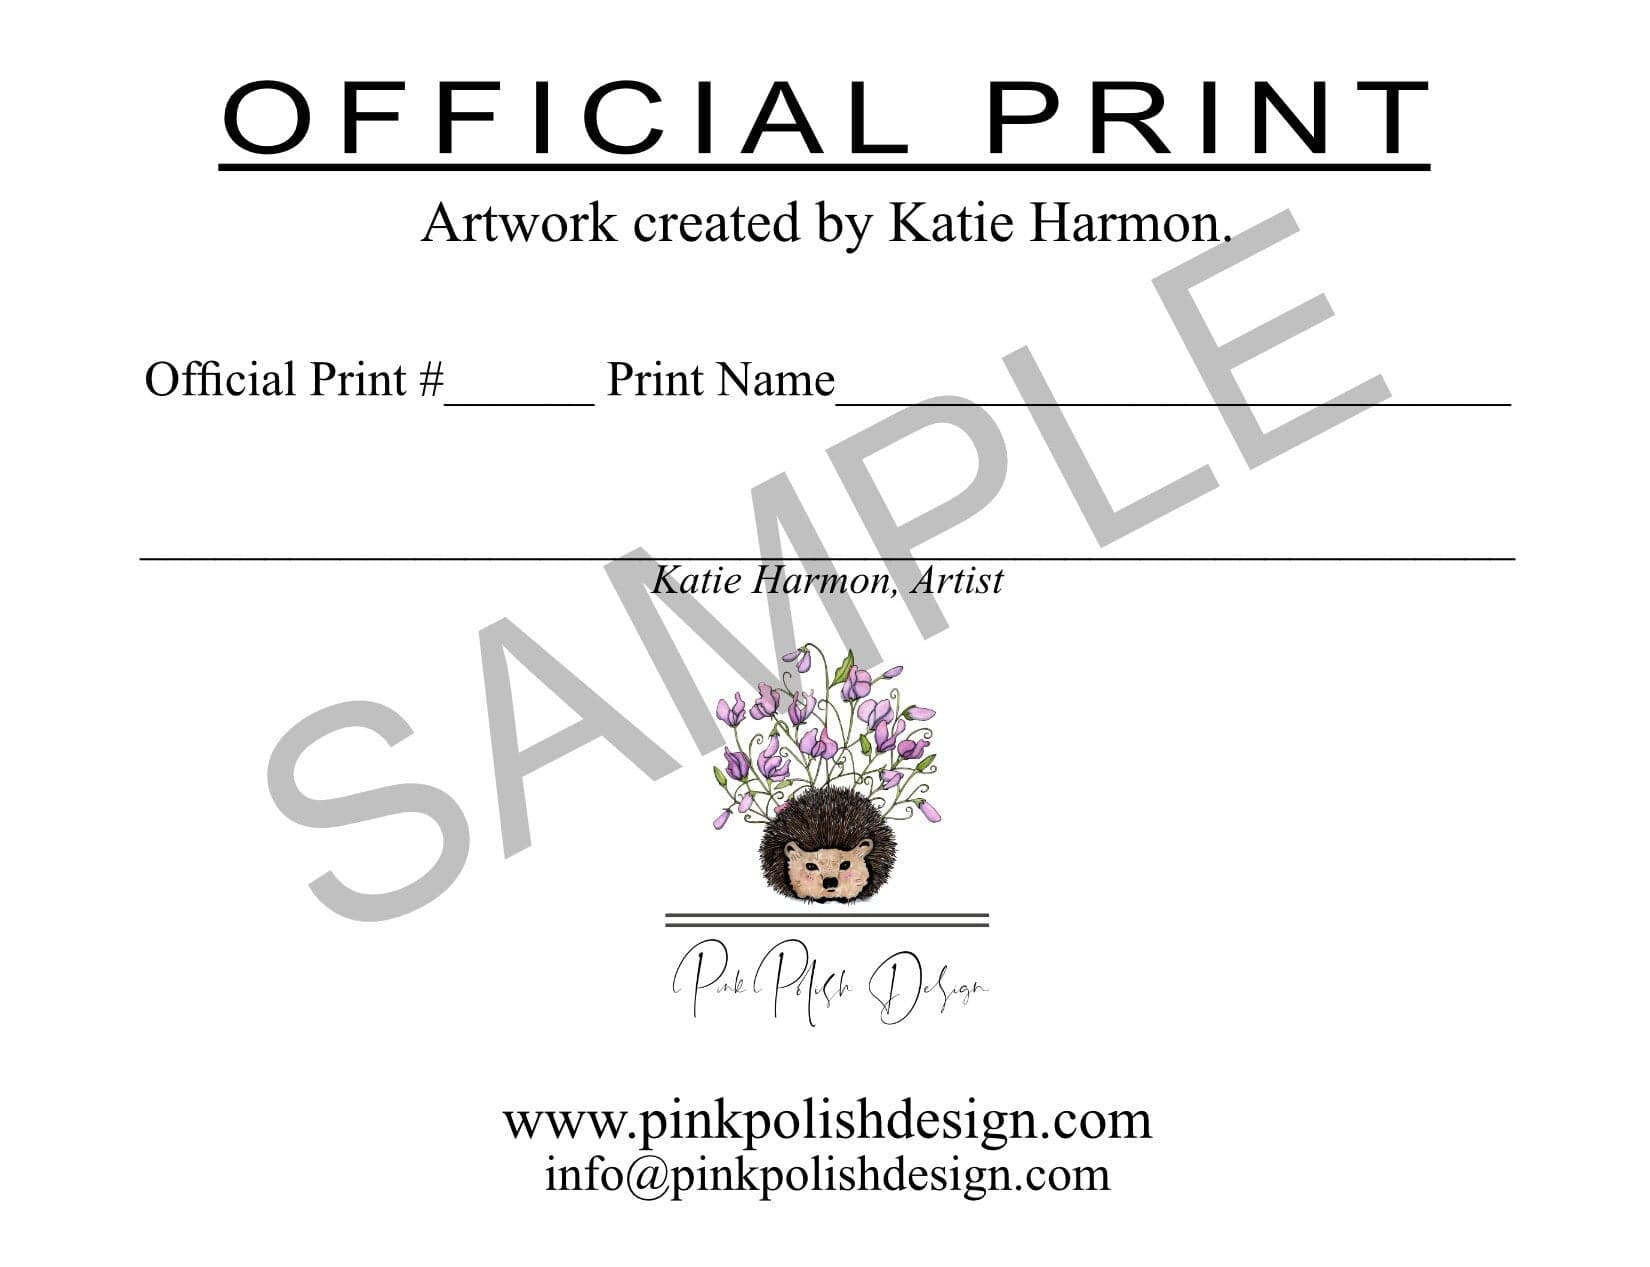 PinkPolish Design Posters, Prints, & Visual Artwork "Daisy" Ink Drawing: Art Print